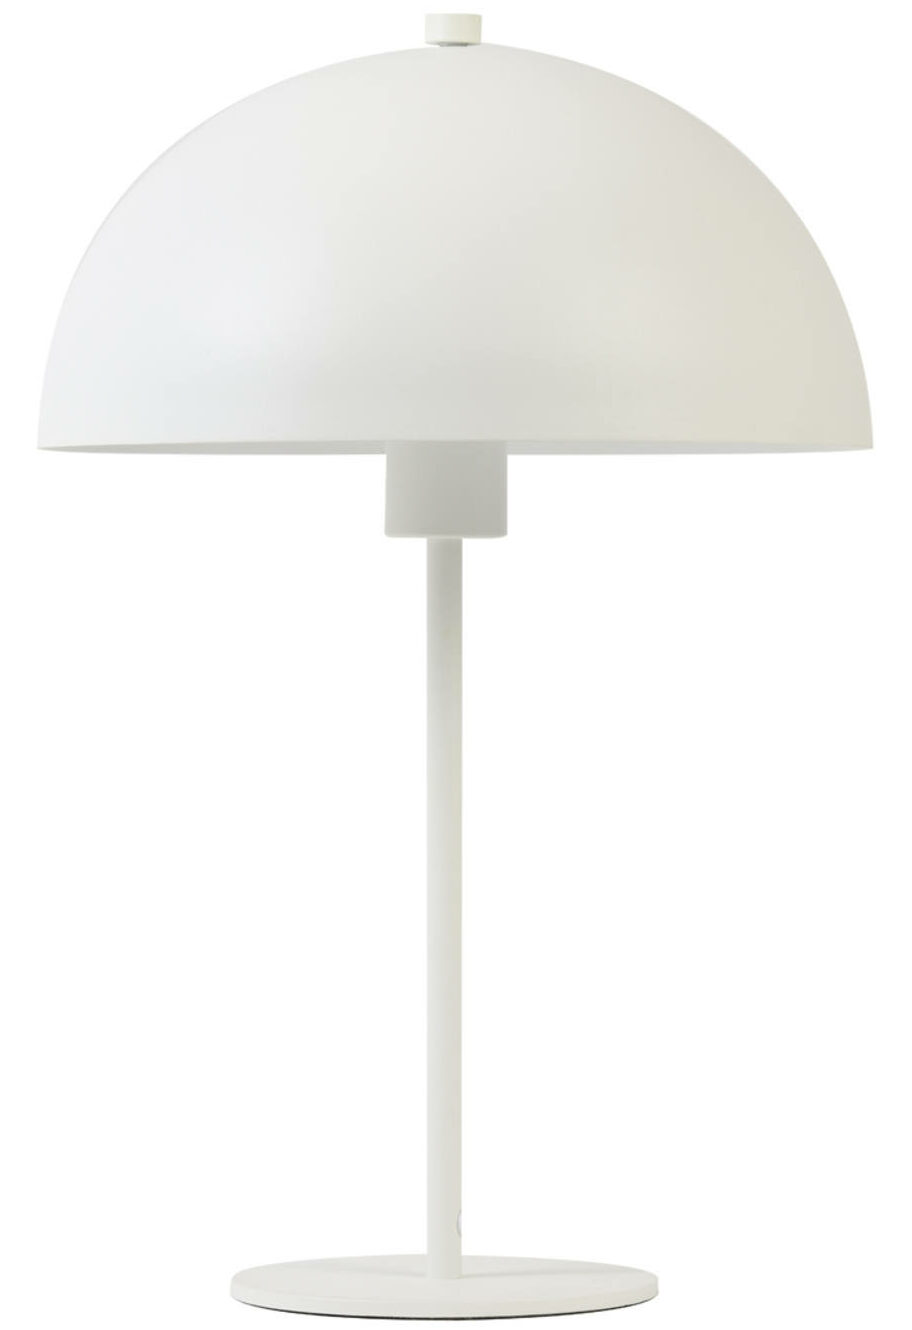 Light & Living Tafellamp 'Merel' 45cm, mat wit